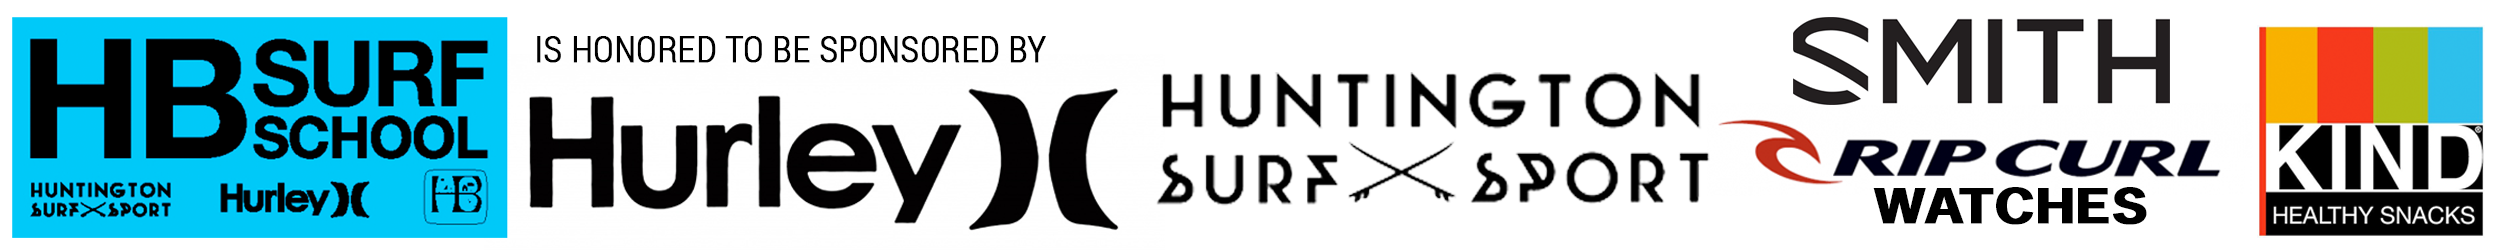 HB Surf School